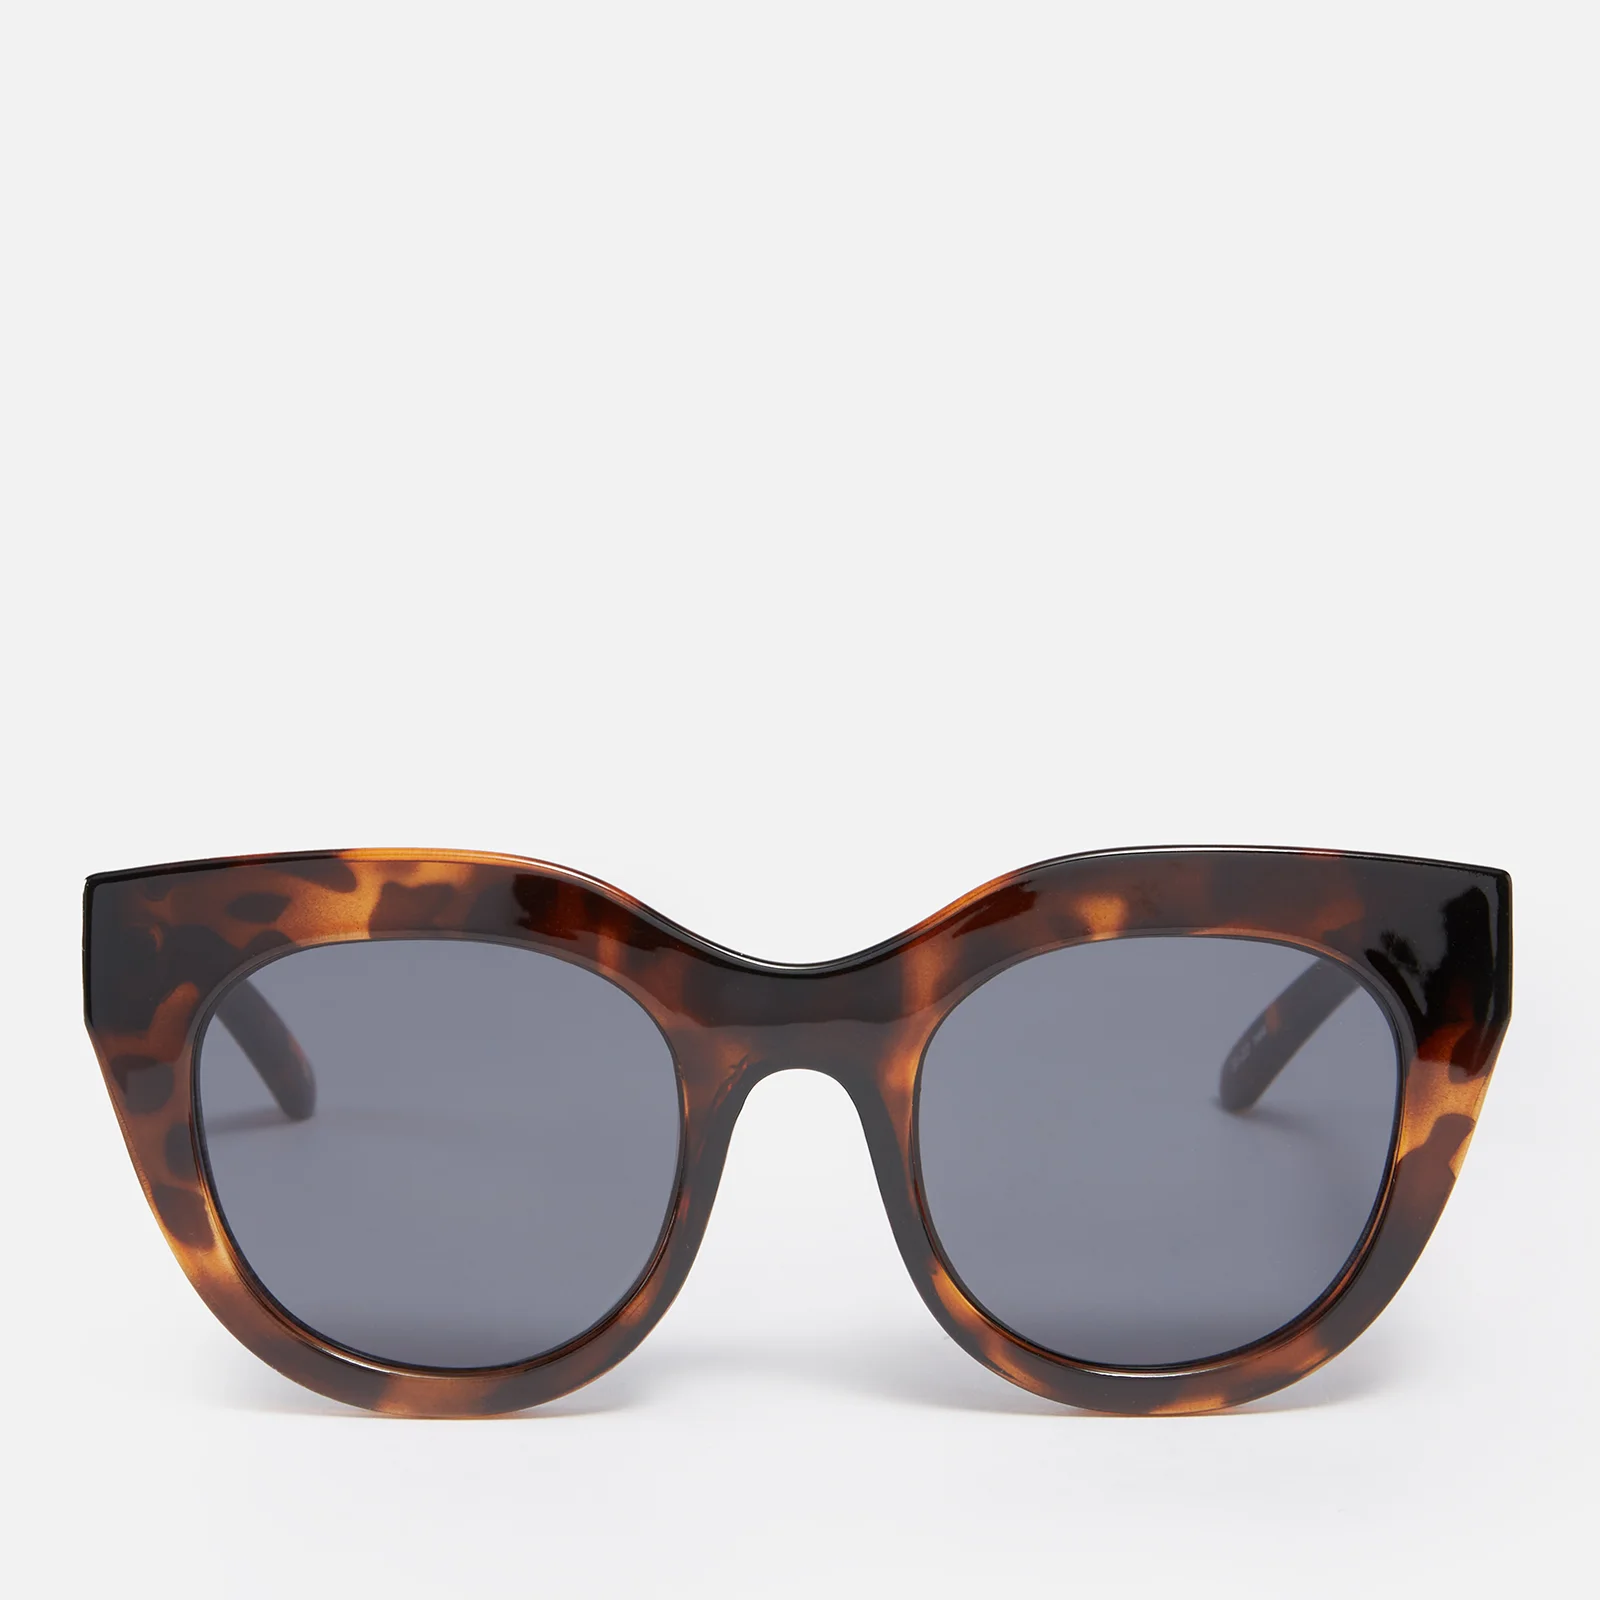 Le Specs Women's Air Heart Sunglasses - Tort Image 1